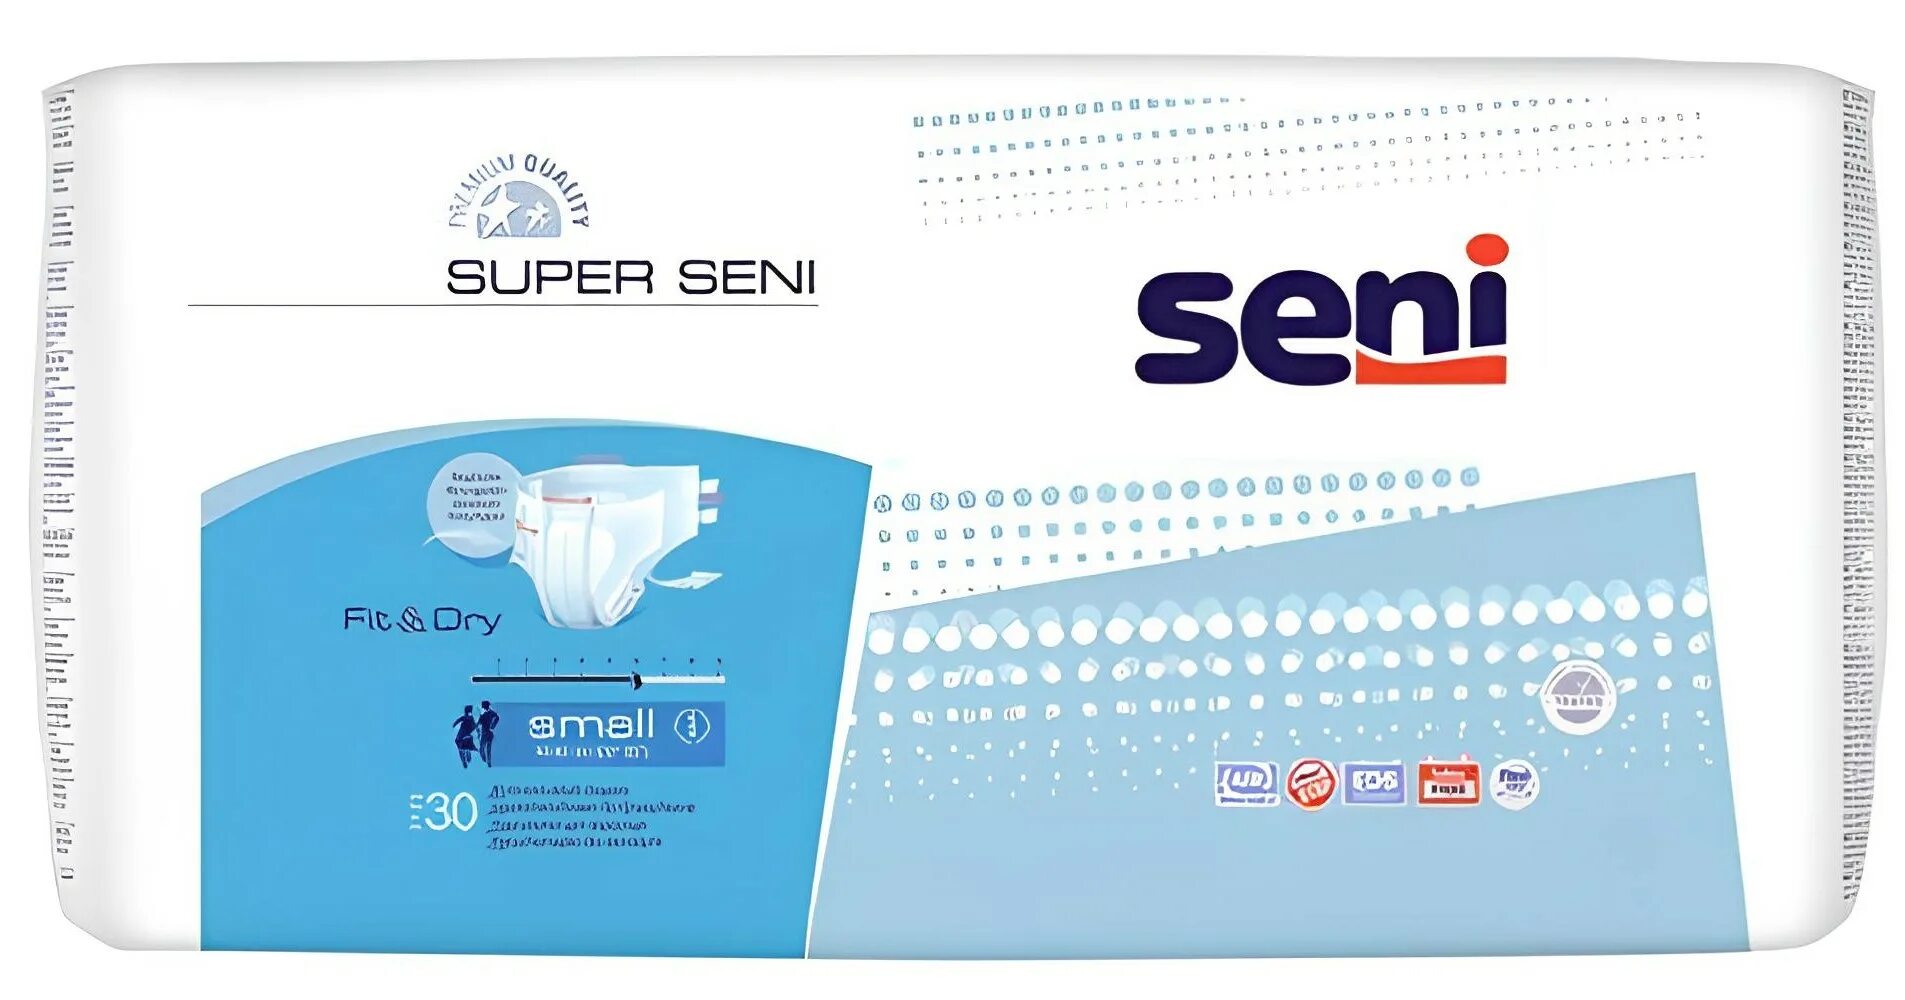 Super Seni XL 30 шт. Super Seni large 30 шт. Супер сени / super Seni - подгузники для взрослых large 30 шт. Super Seni Medium Classic 30 шт.